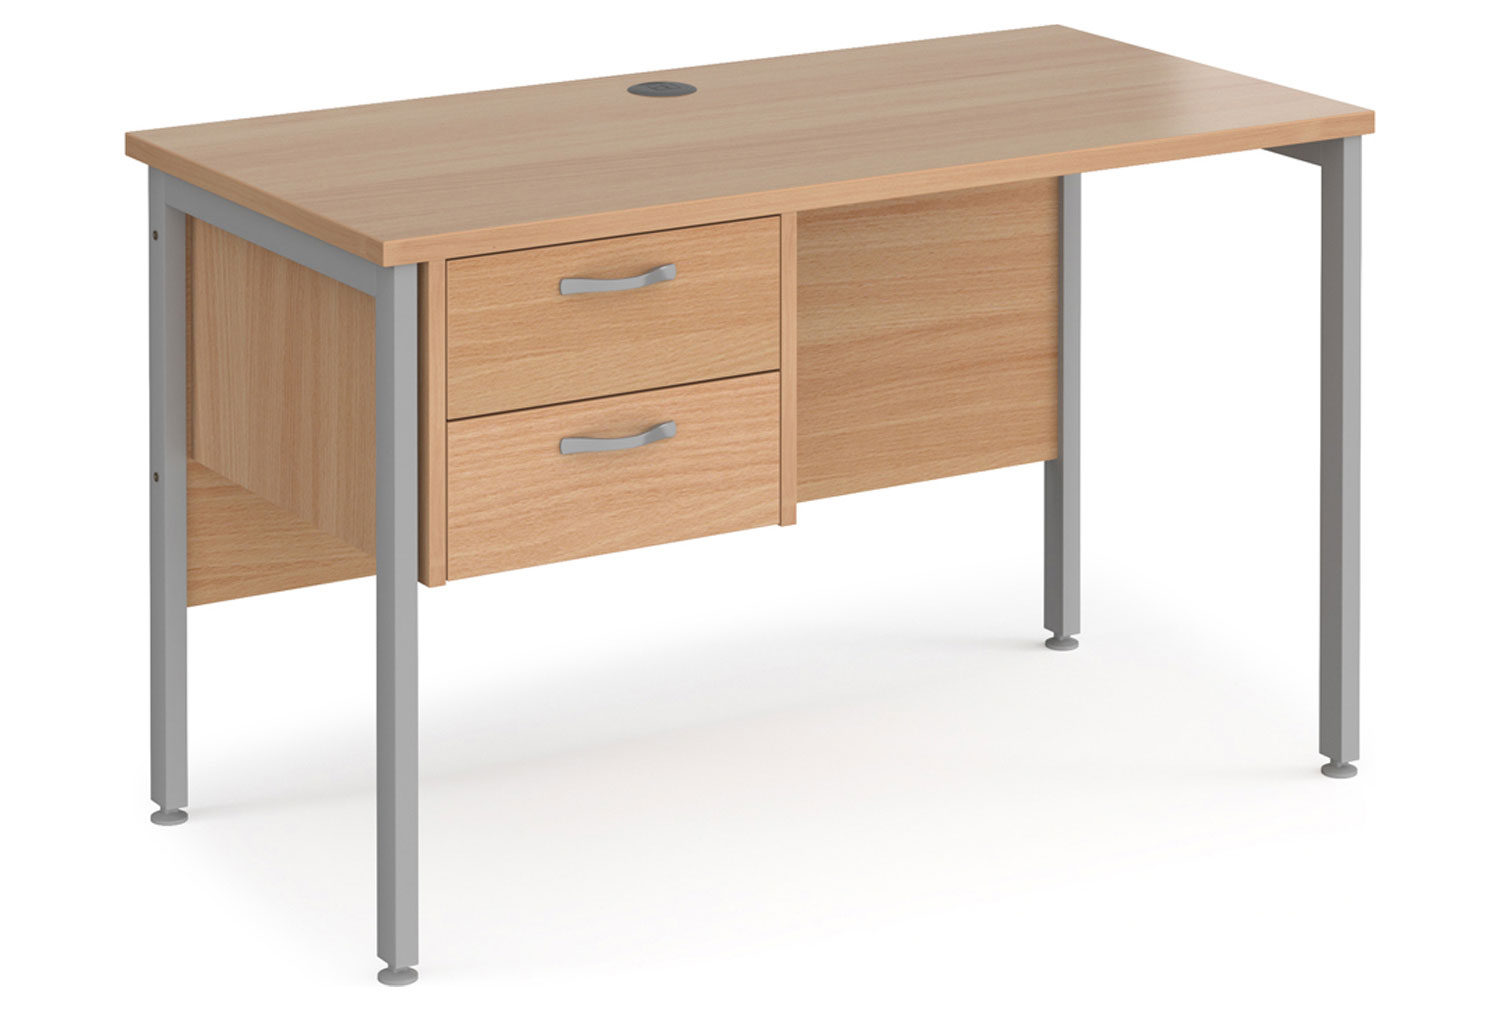 Alcott H-Leg Narrow Rectangular Home Office Desk With Pedestal, 120w60dx73h (cm), Silver Frame, Beech, Express Delivery